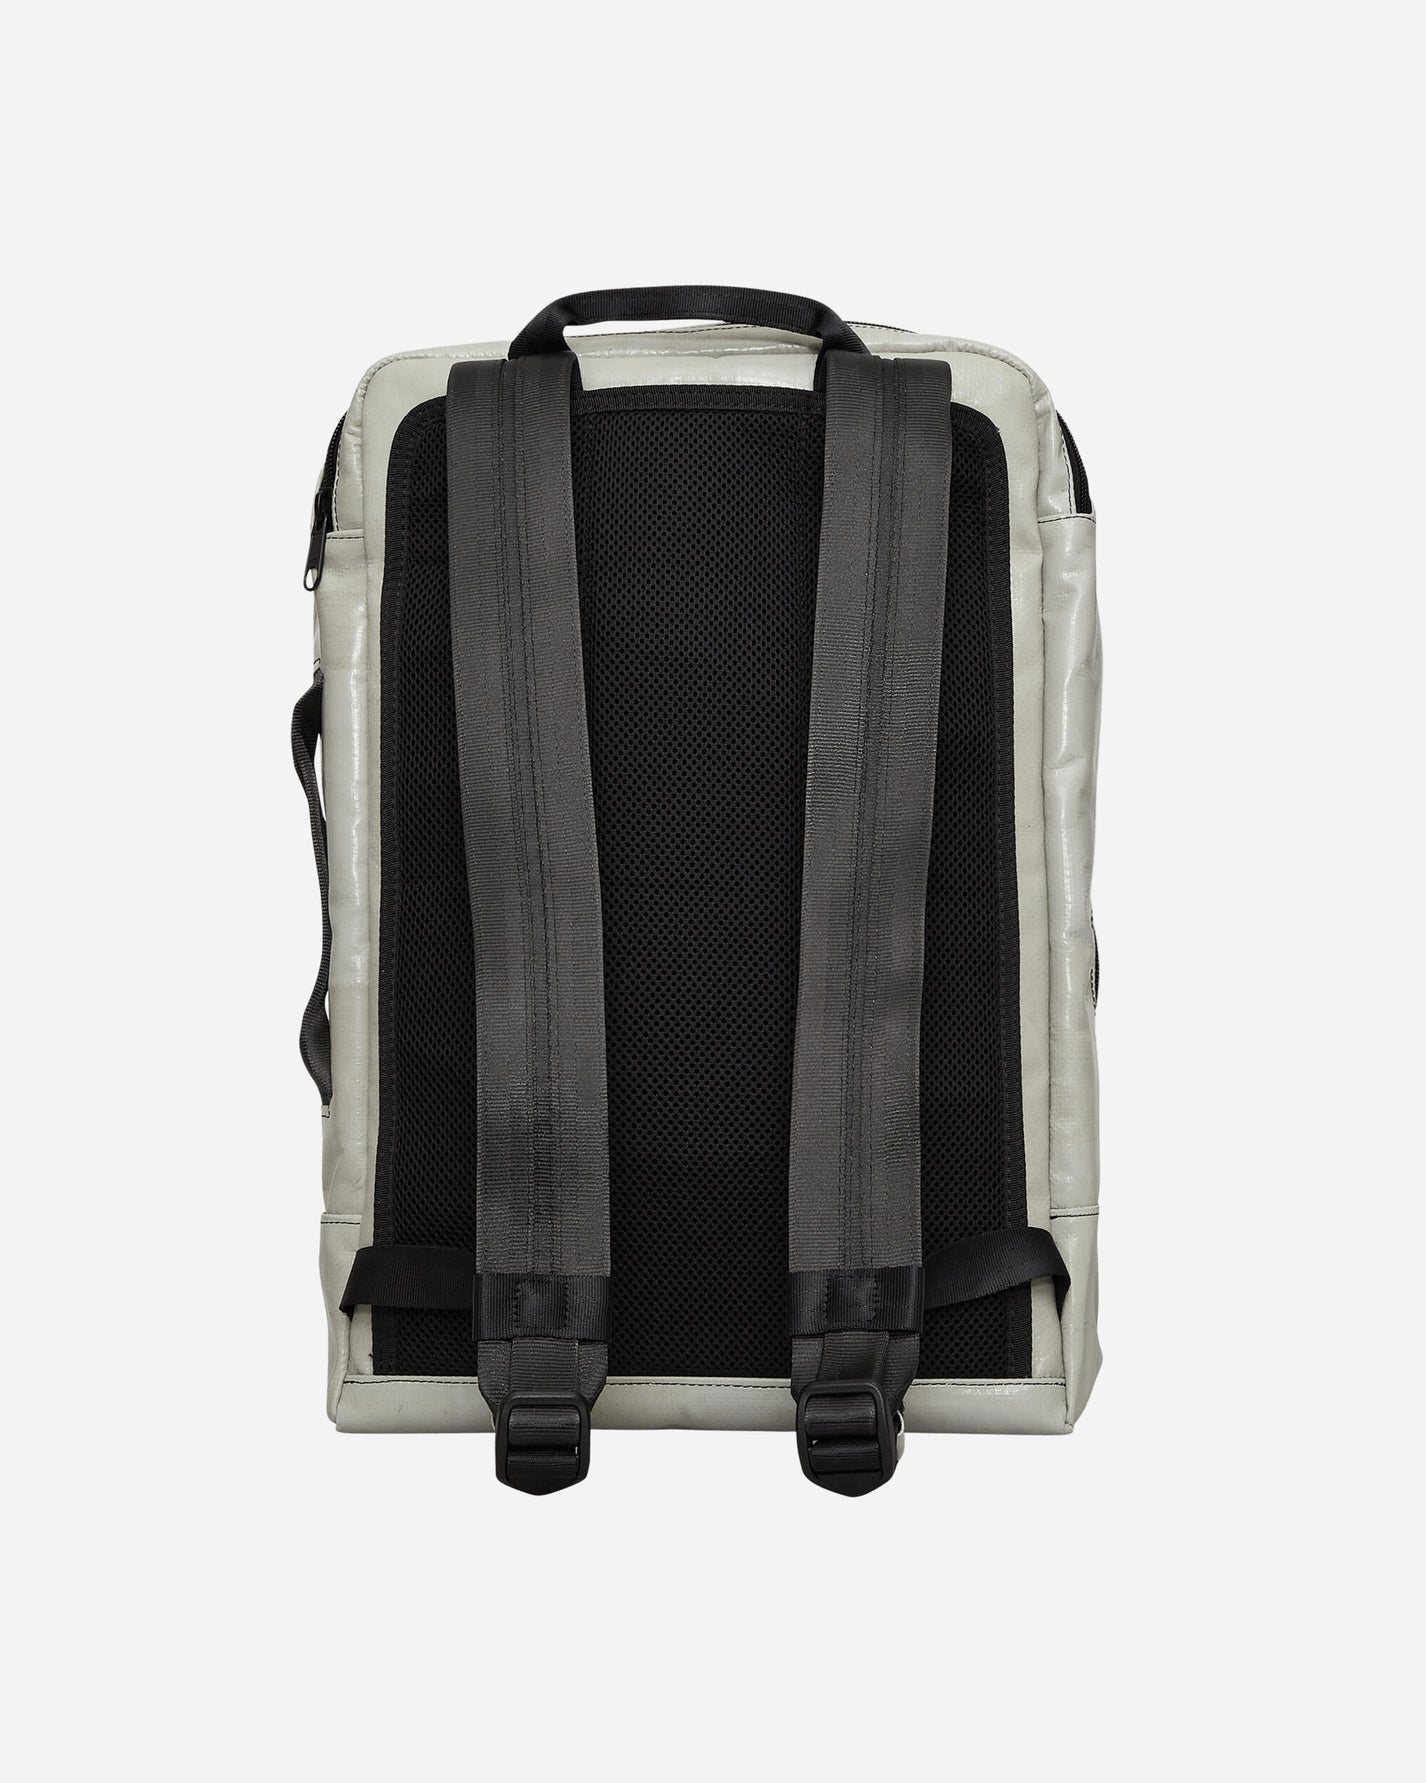 Freitag Hazzard Multi Bags and Backpacks Backpacks FREITAGF306 009